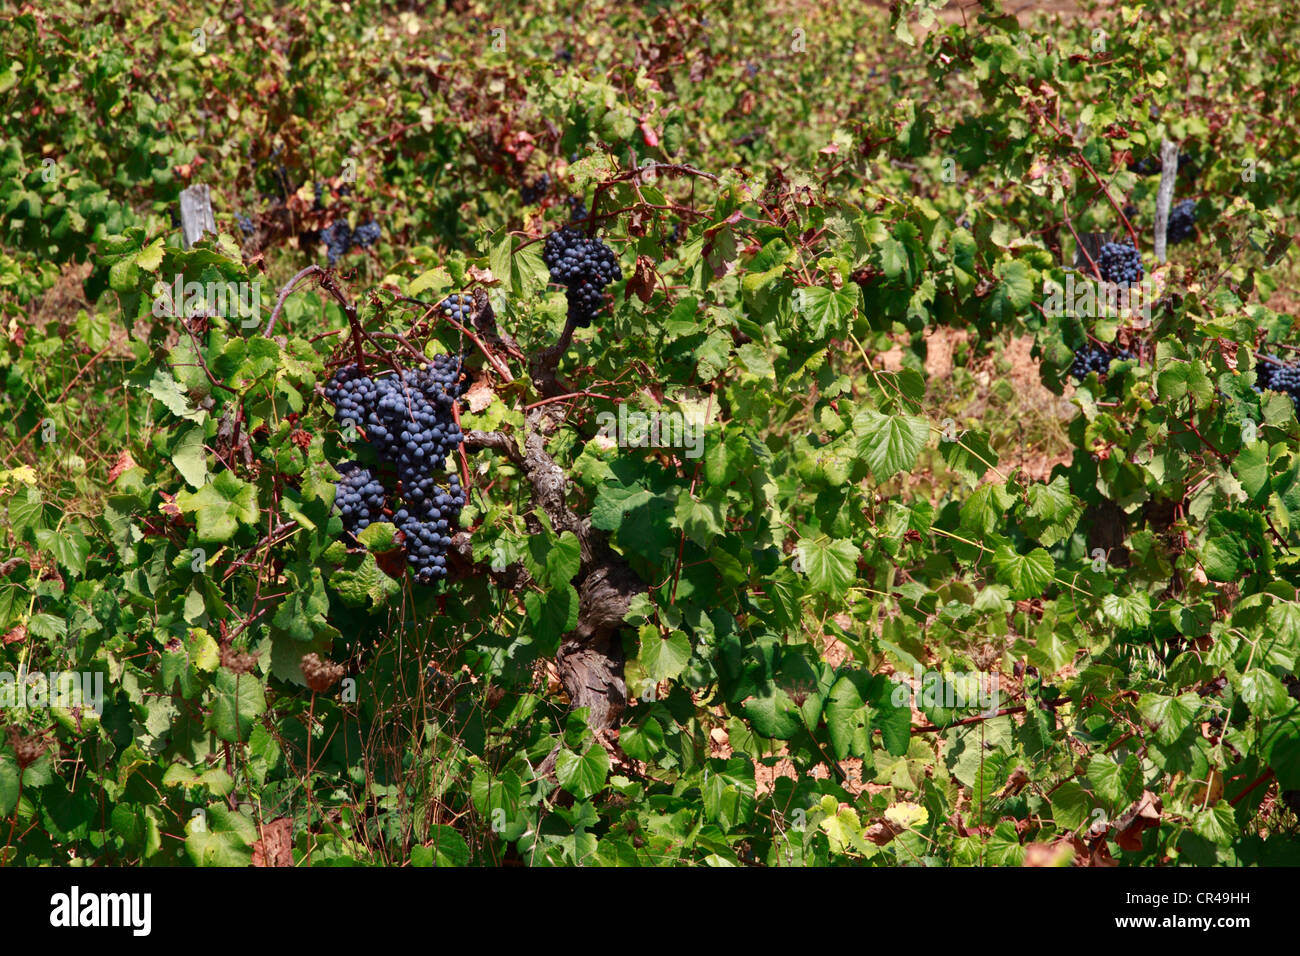 Grapes, Vine (Vitis vinifera) growing in vineyard, San Mateo valley, Ibiza, Spain, Europe Stock Photo